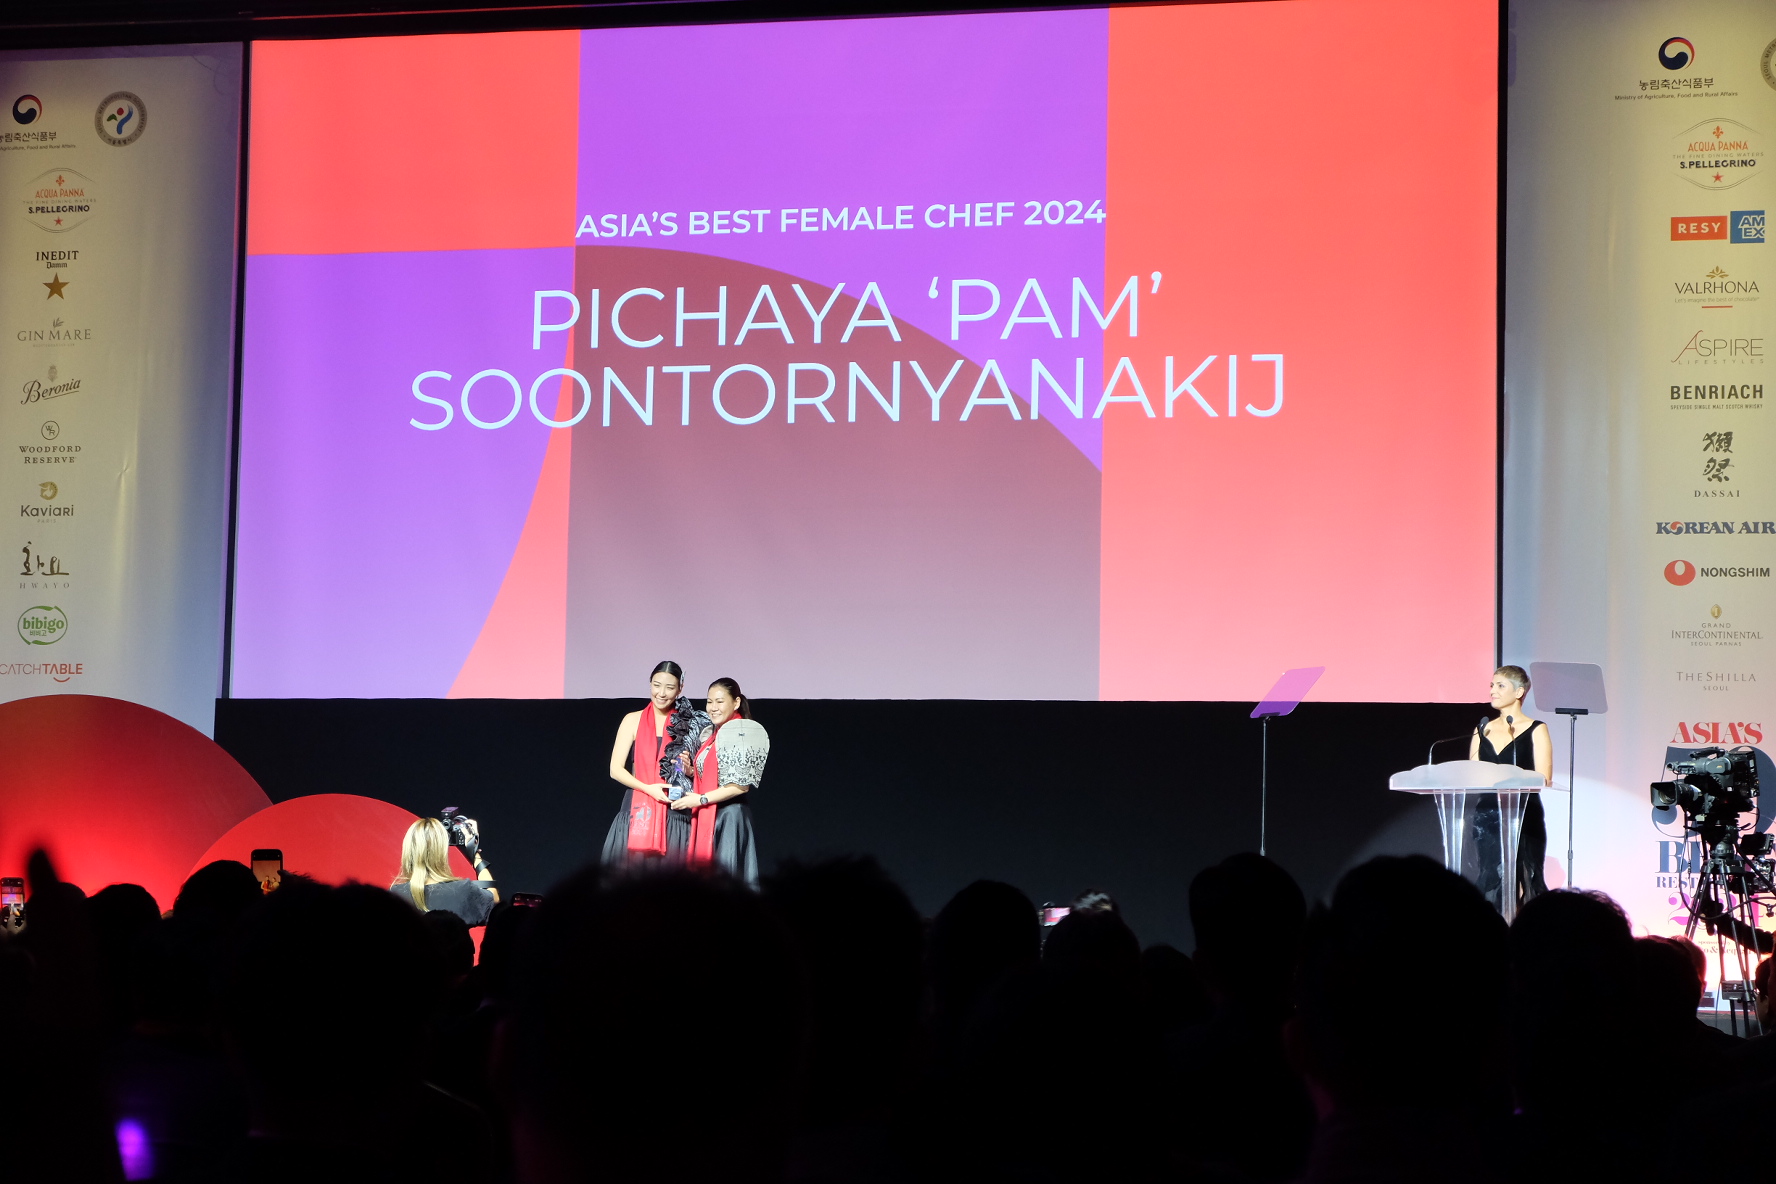 Pichaya ‘Pam’ Soontornyanakij of Bankok’s Potong was named Asia’s Best Female Chef this year. 